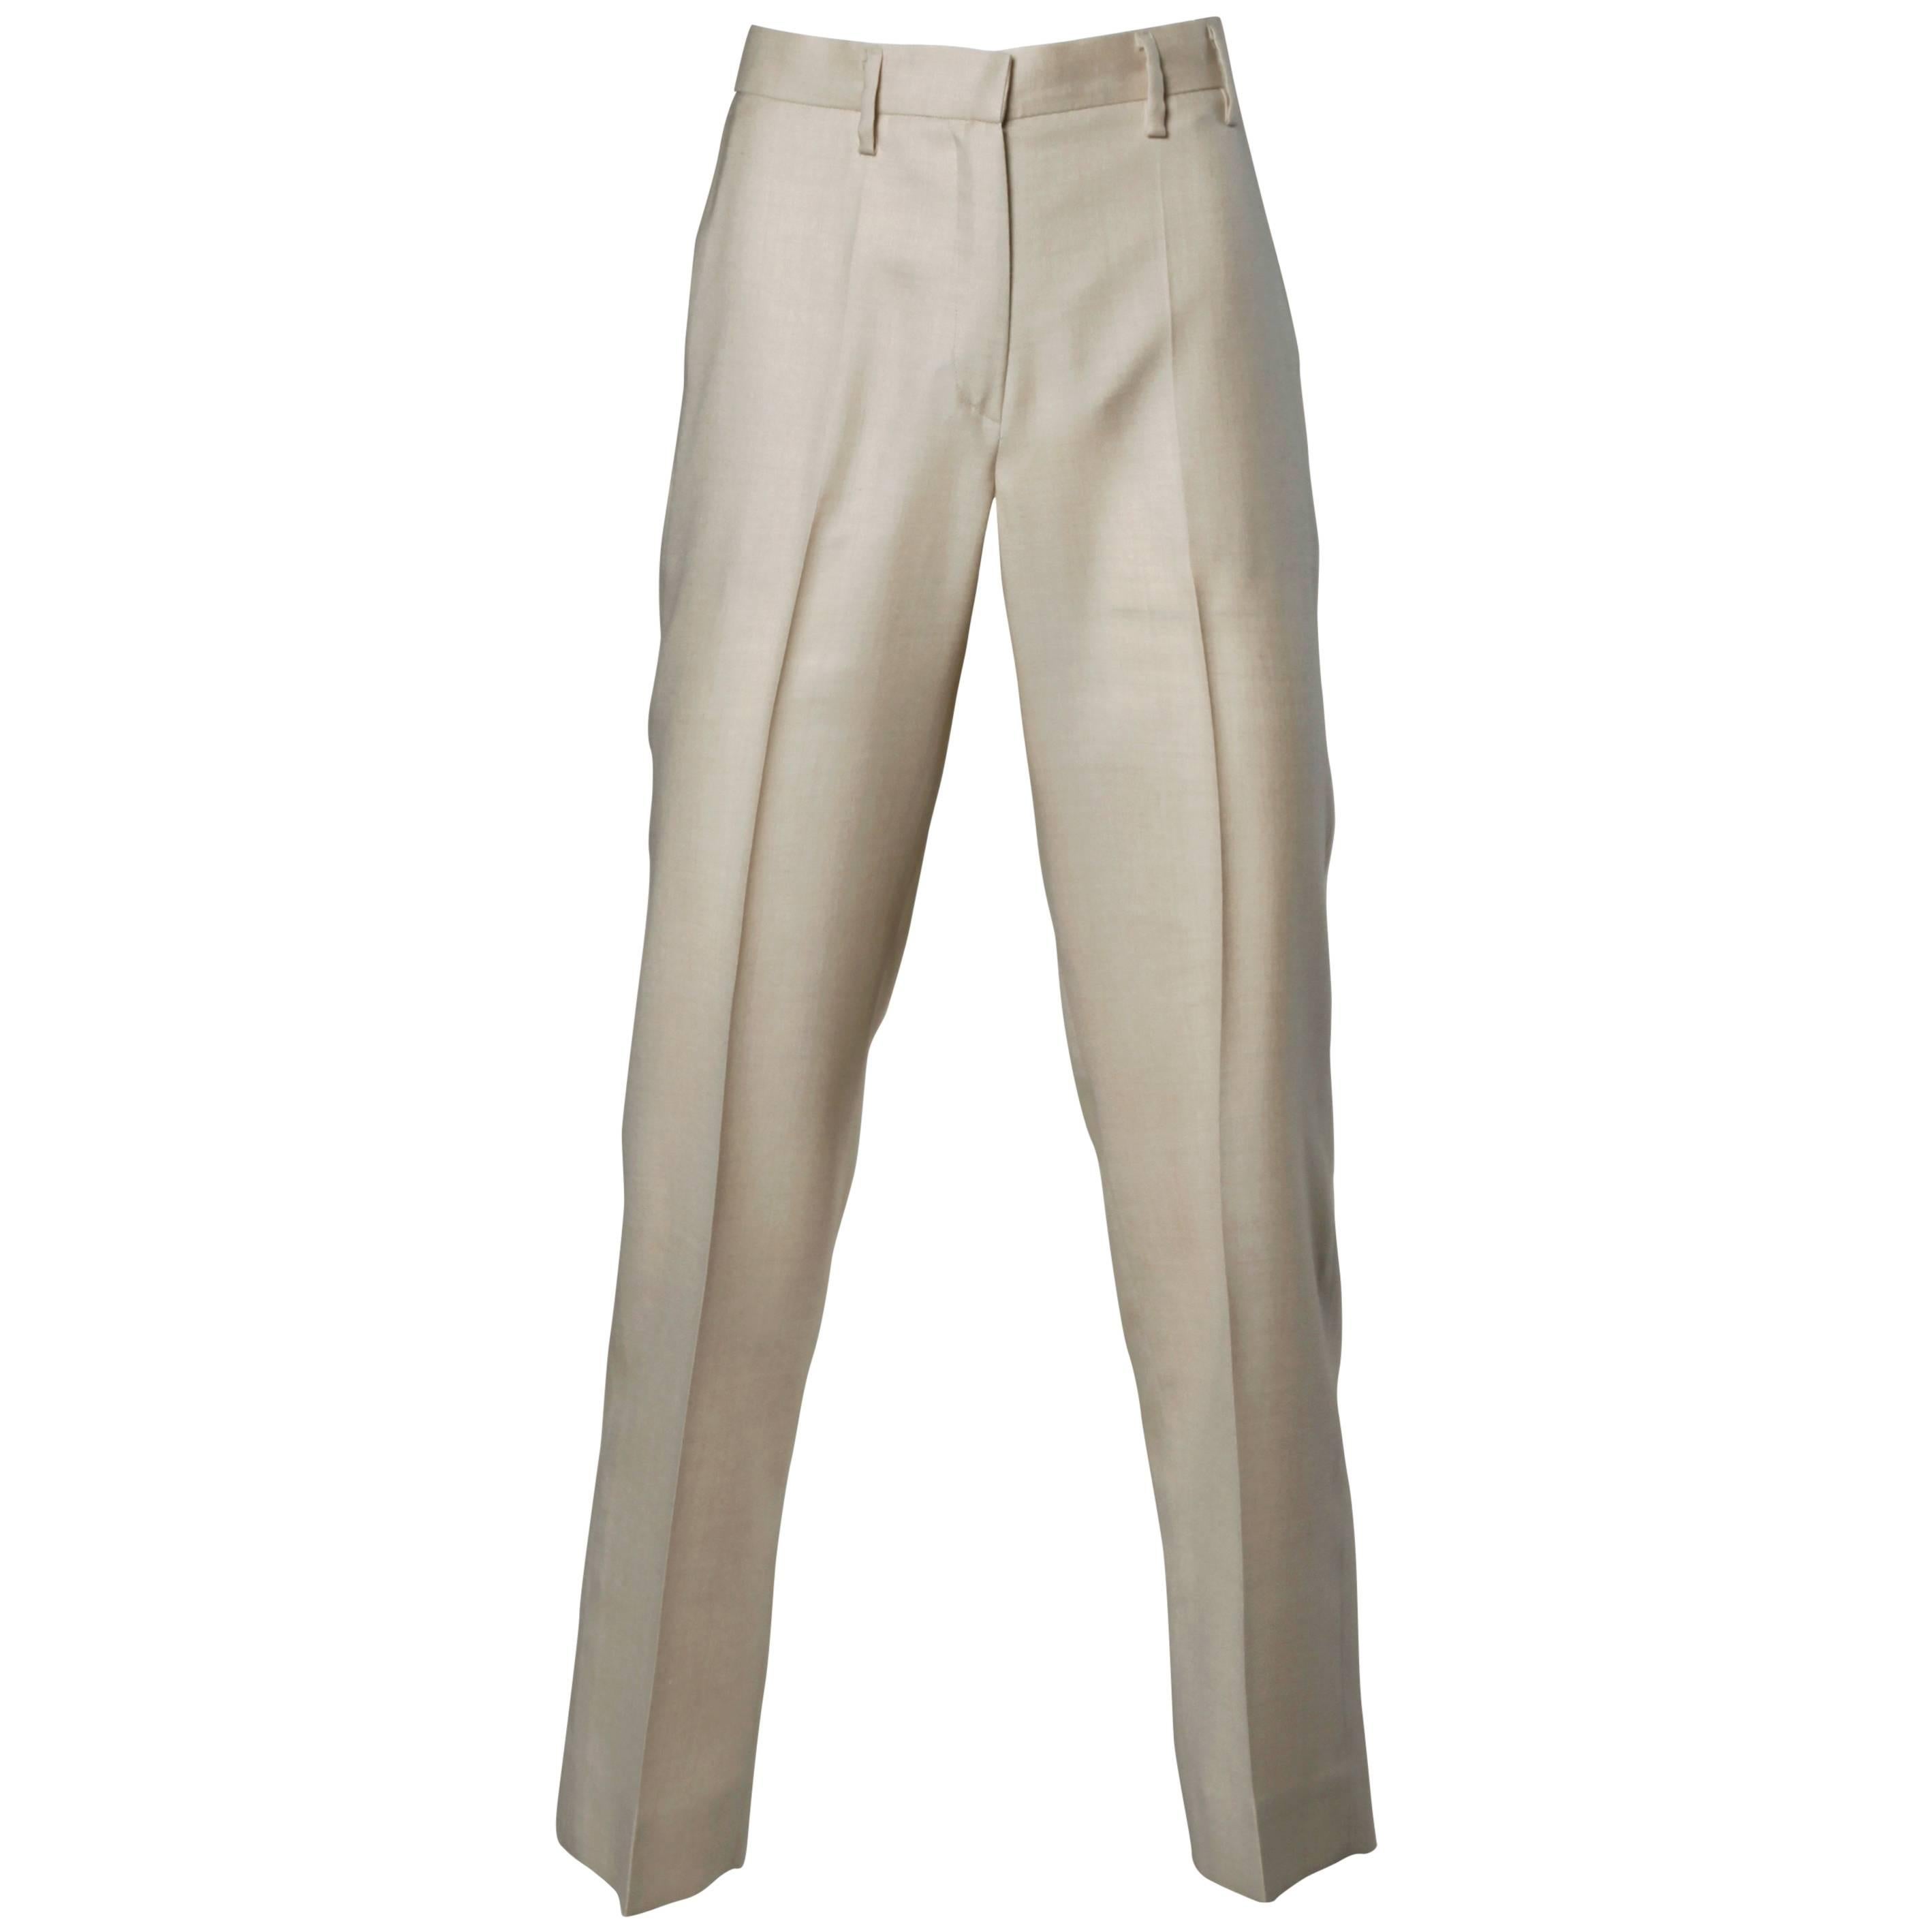 Jil Sander Wool Trousers or Pants in a Size 34